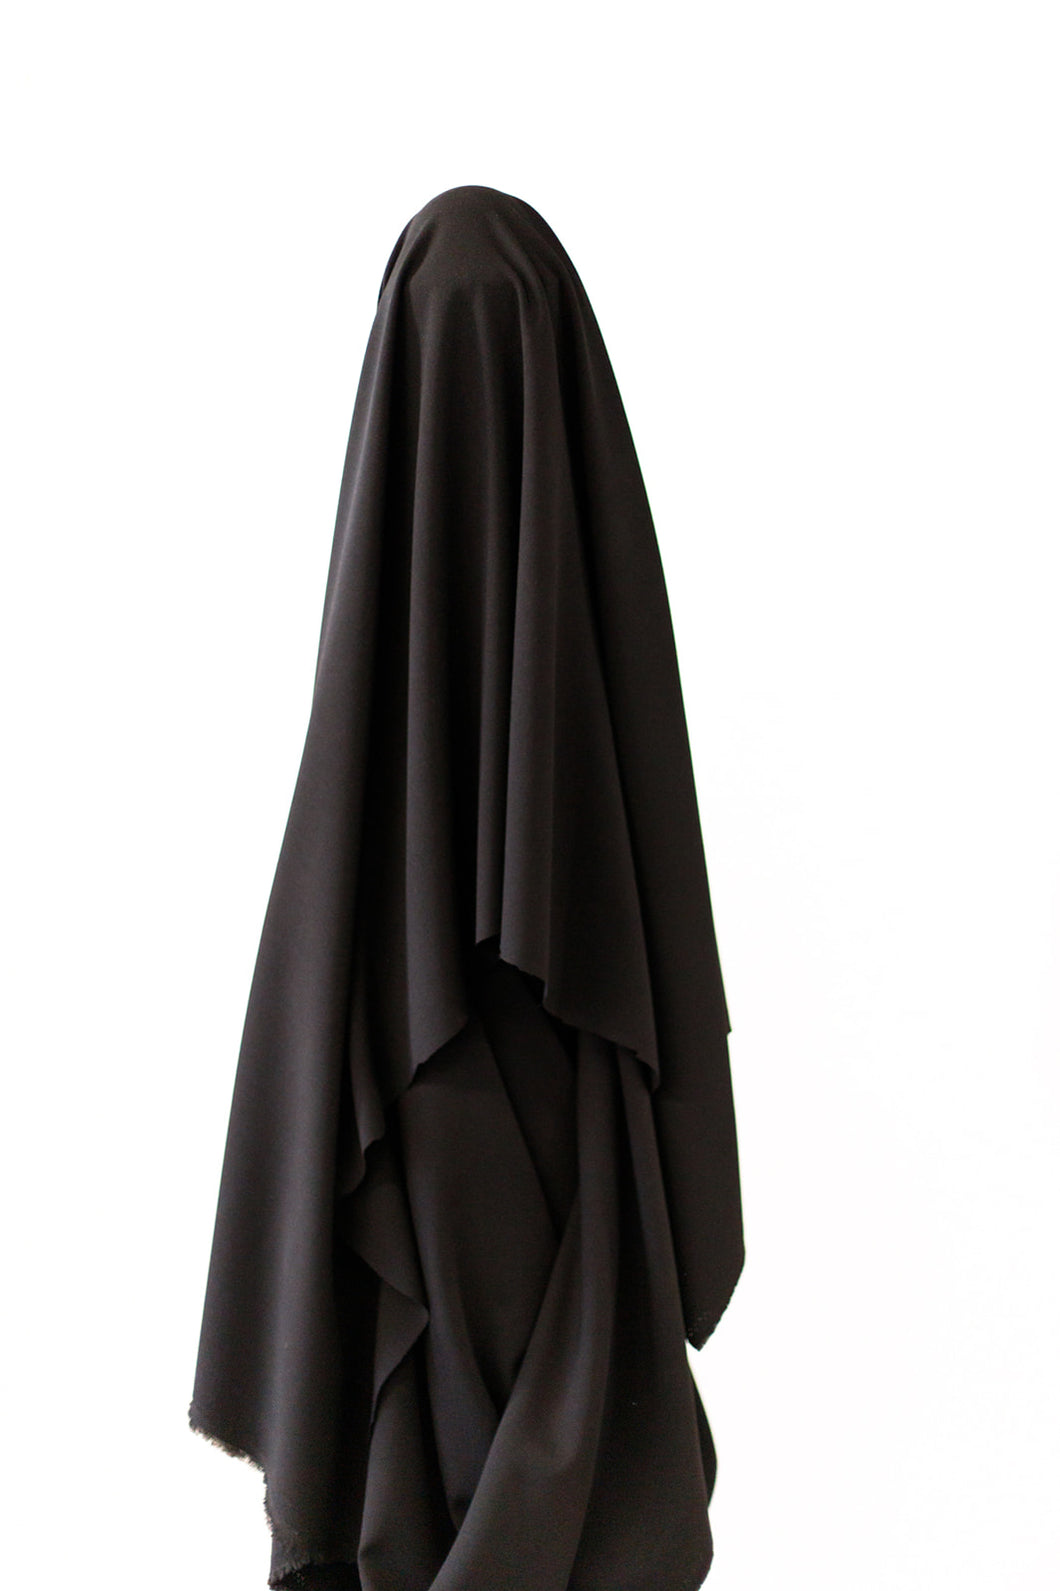 Poly Rayon Spandex Blend Black Pant Fabric 130gsm $30 pm